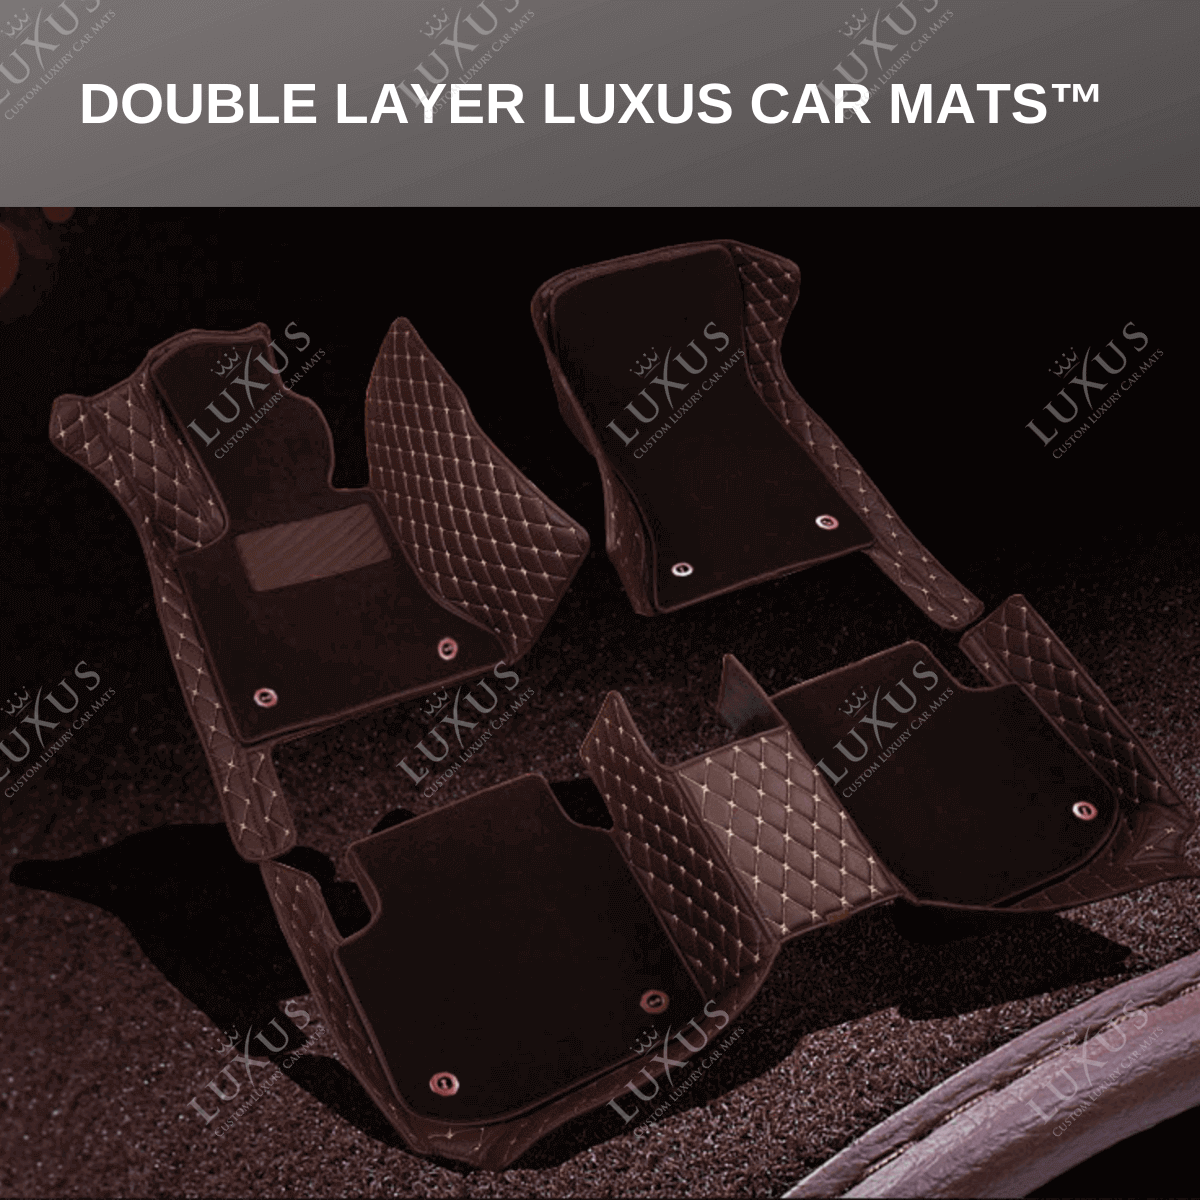 Black & Beige Diamond Stitching Base & Grey Top Carpet Double Layer Luxury Car Mats Set